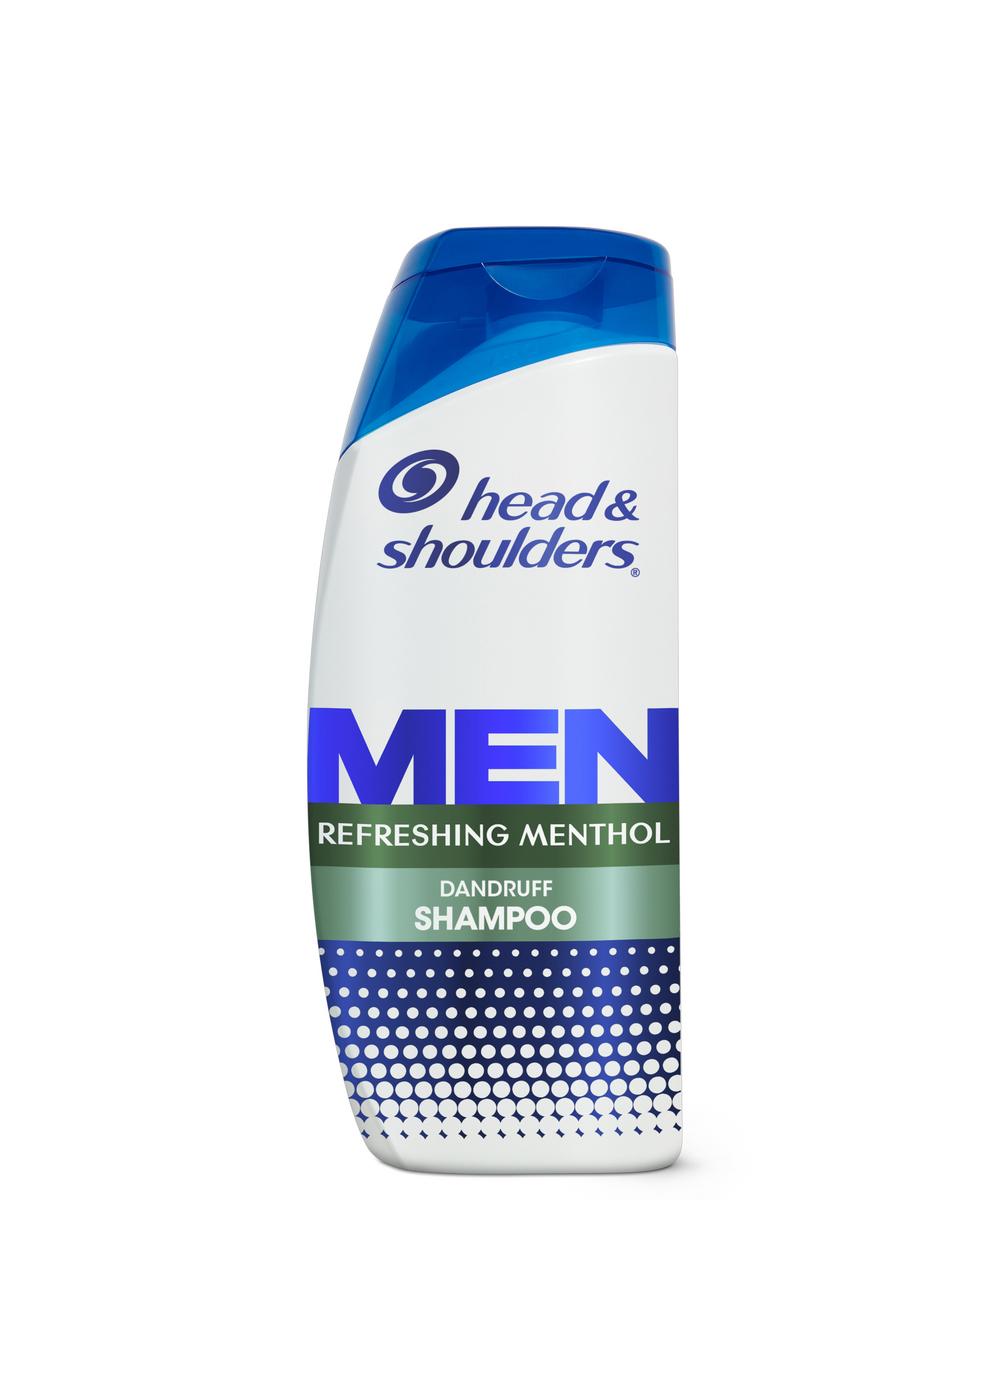 Head & Shoulders Men Dandruff Shampoo - Refreshing Menthol; image 4 of 11